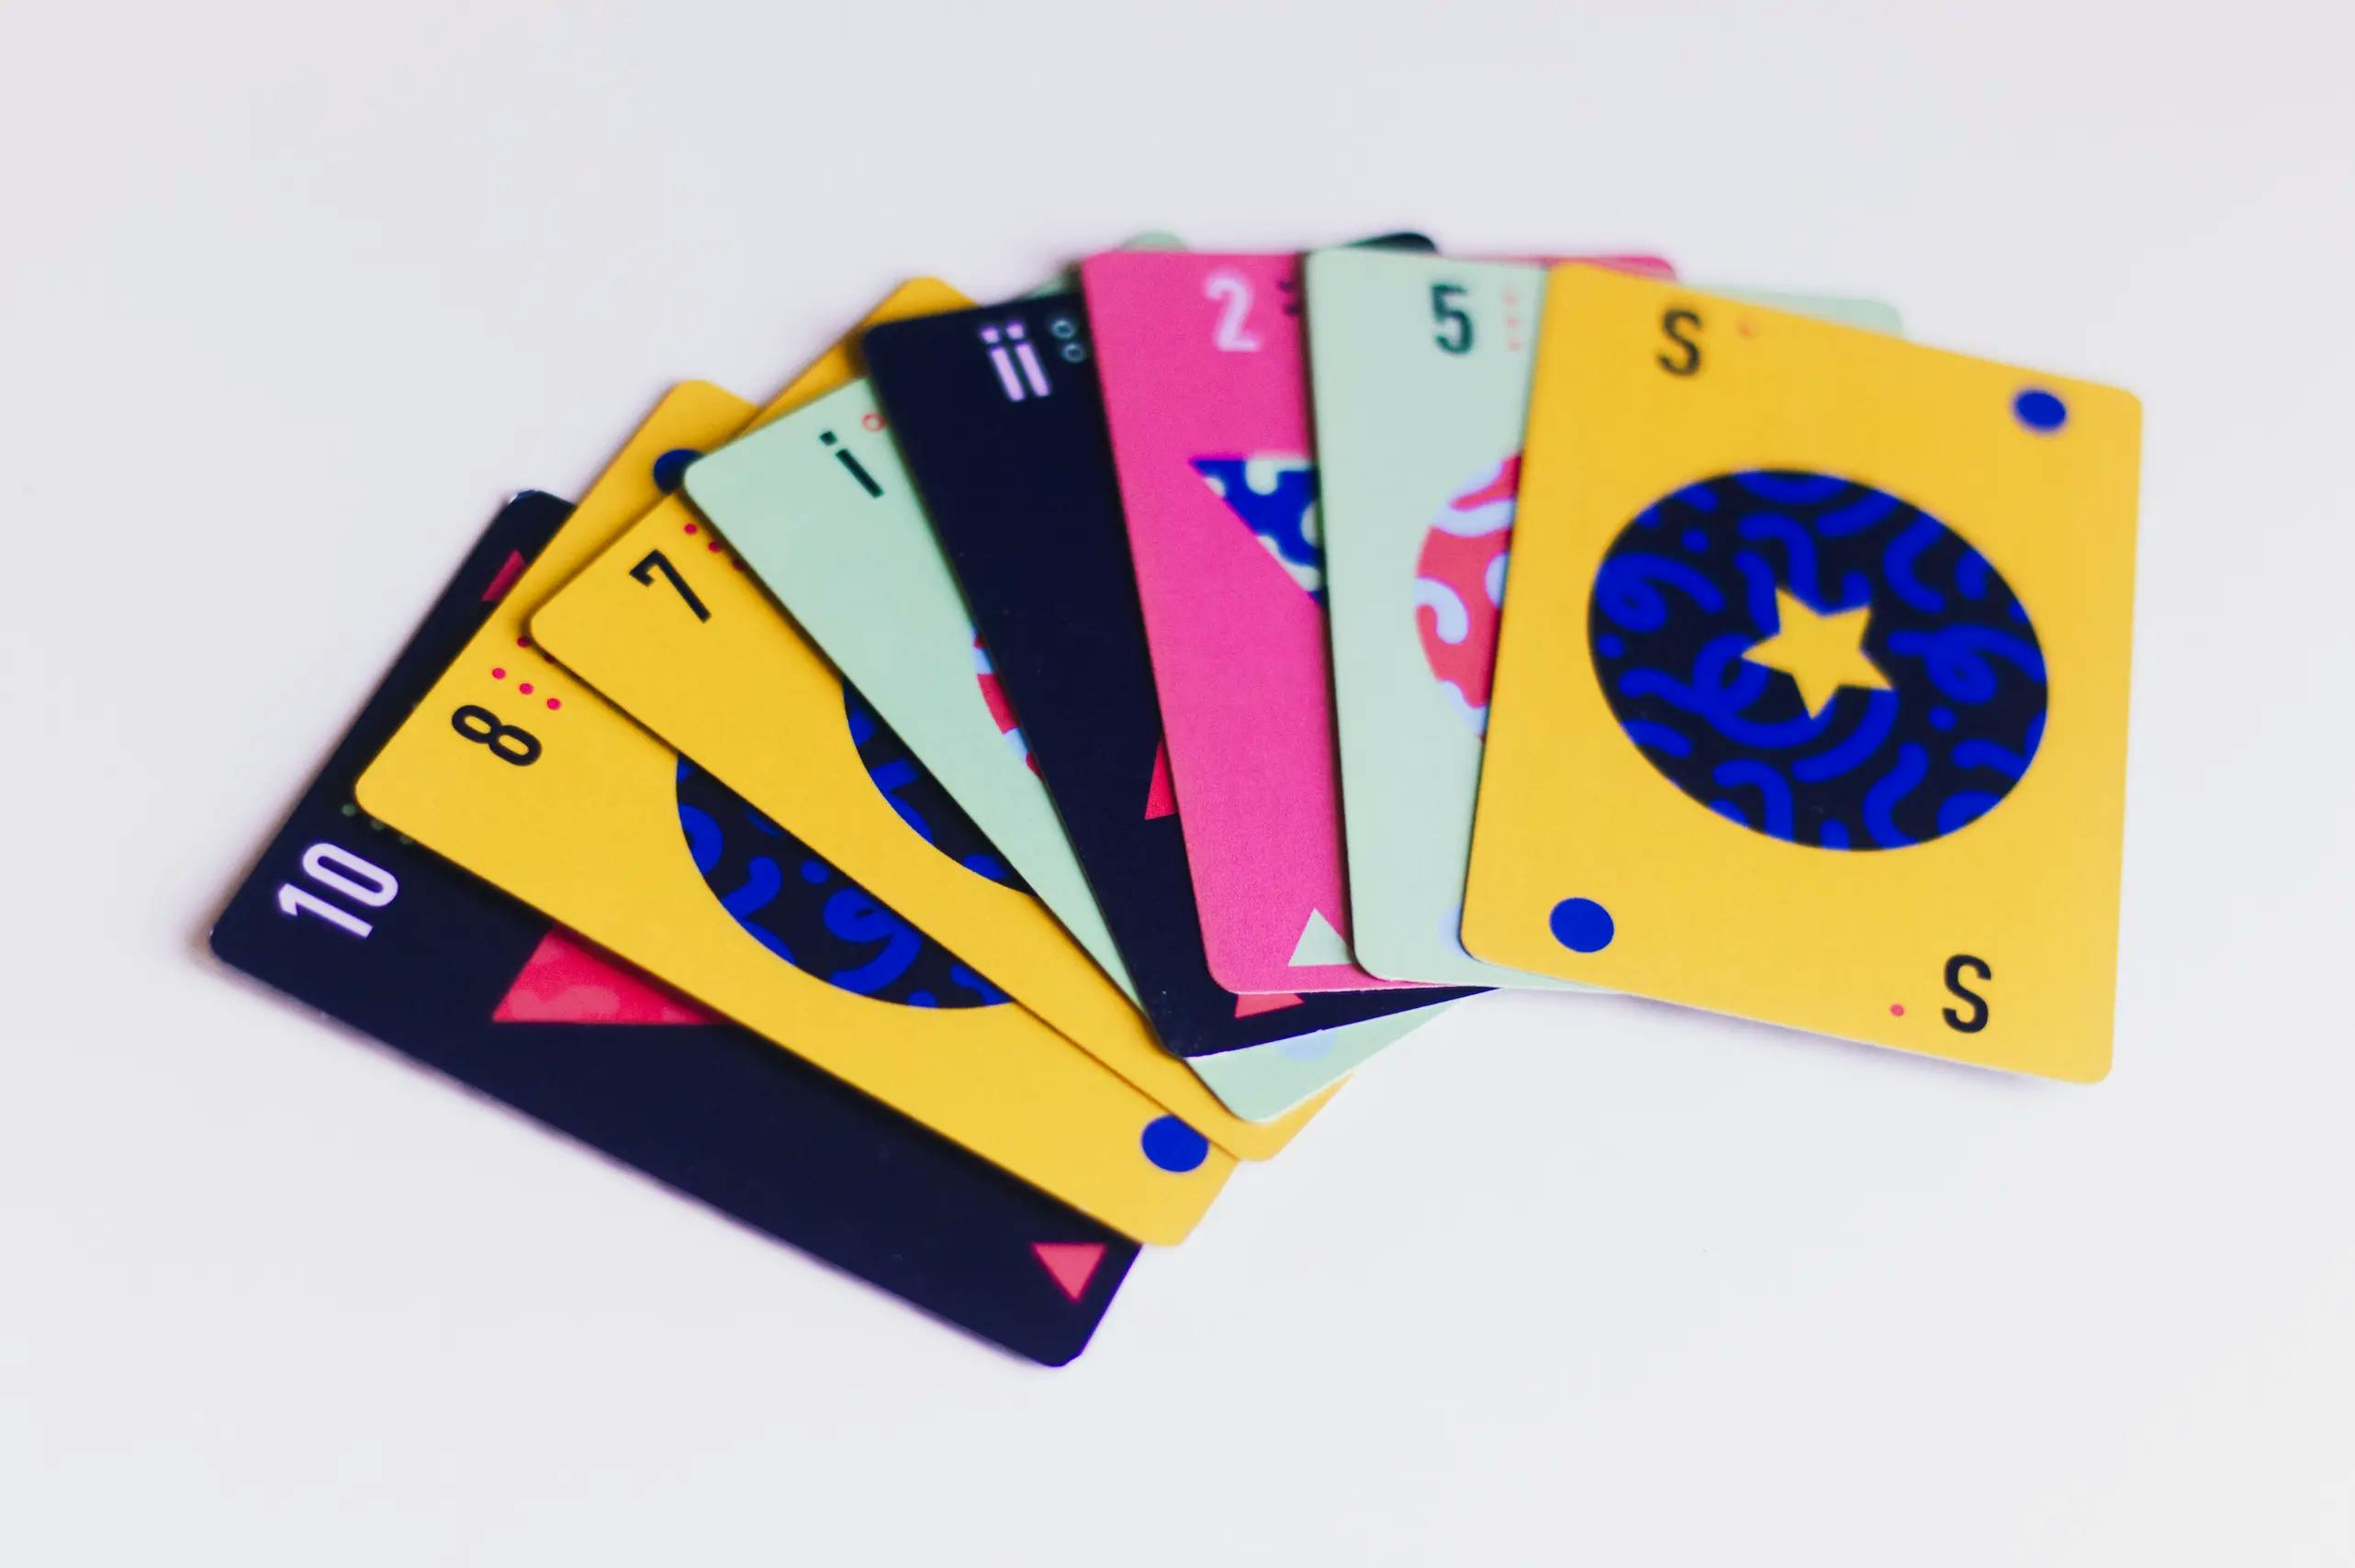 8 pop solitaire cards.